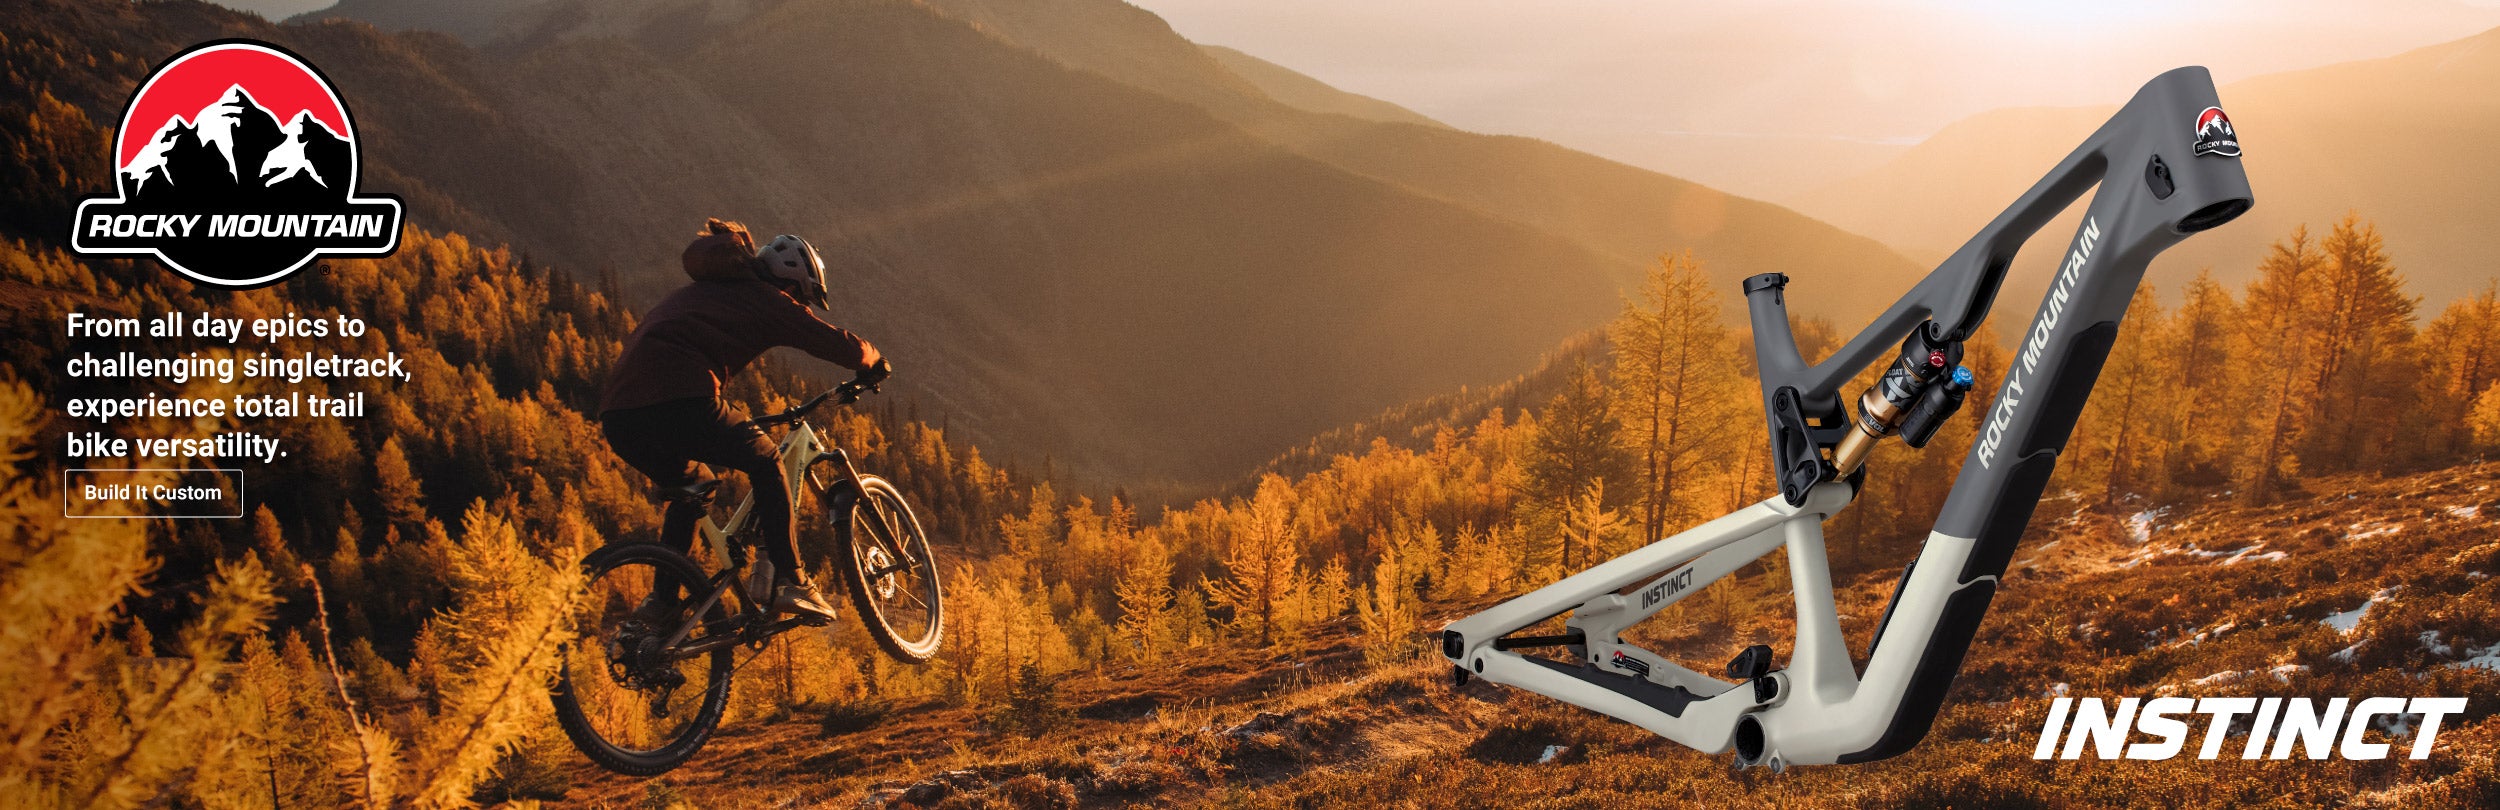 Build the New Rocky Mountain Instinct in our Custom Bike Builder